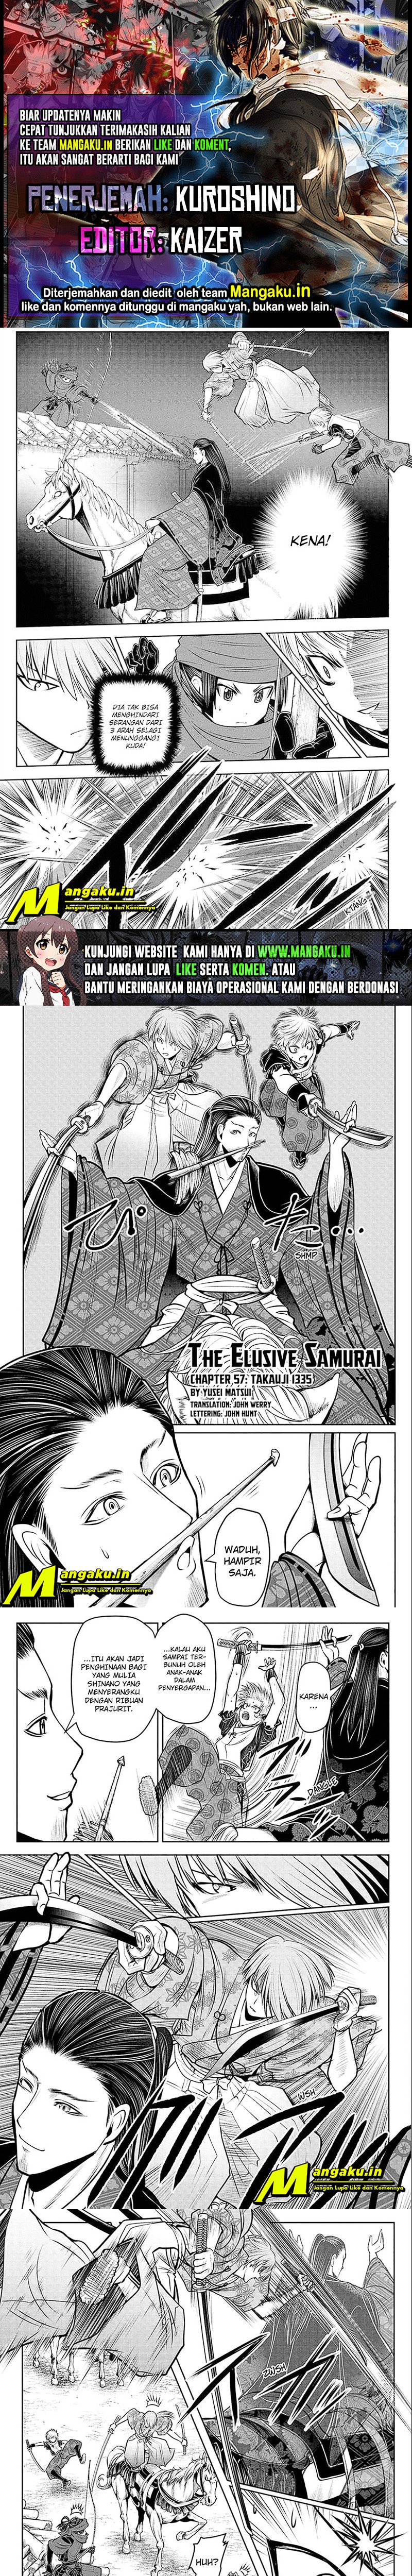 The Elusive Samurai Chapter 57 1